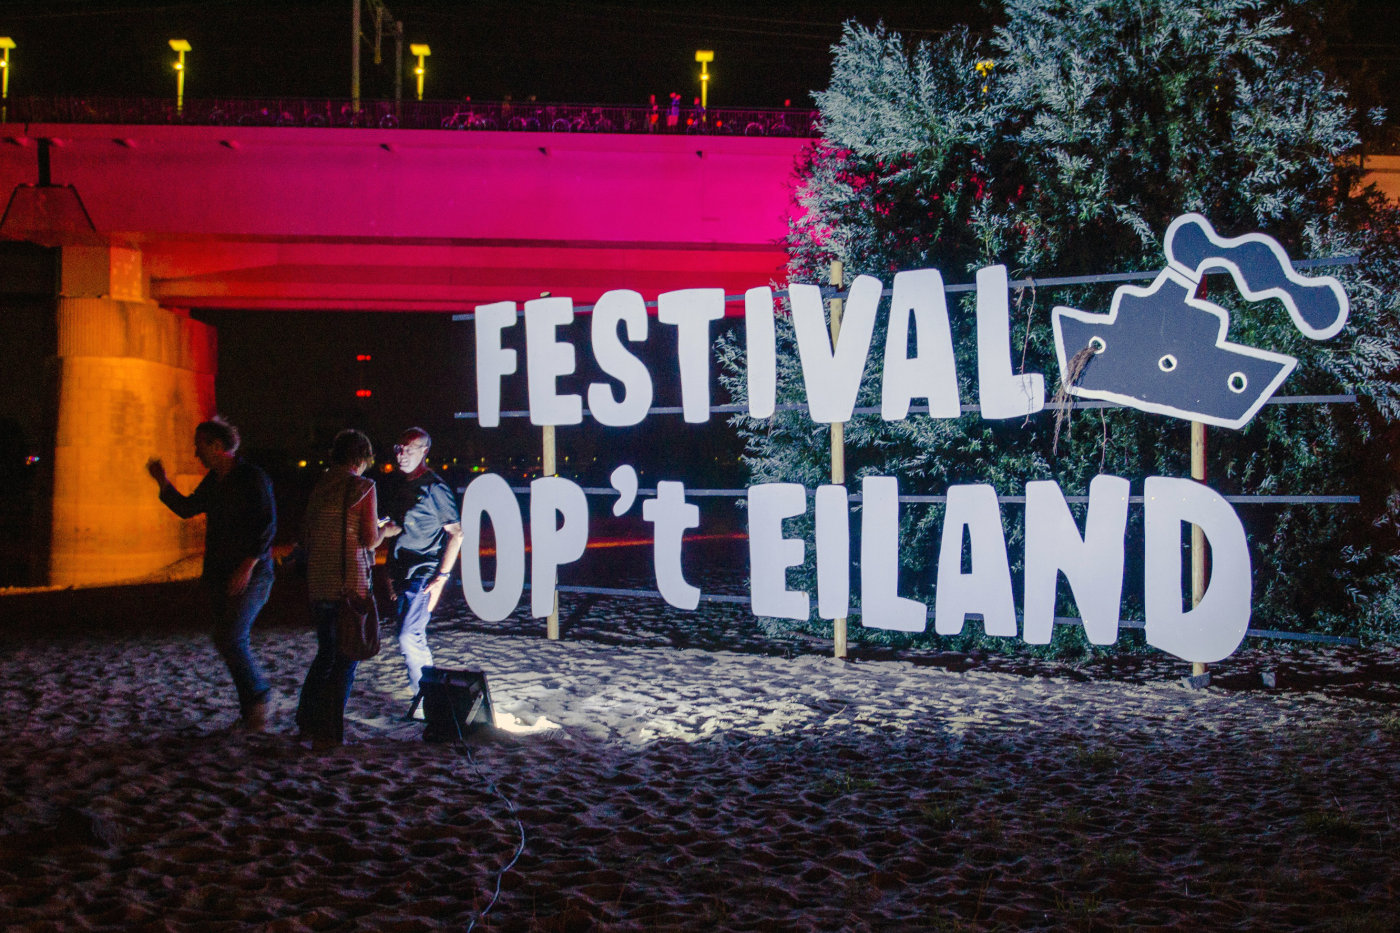 Festival op het eiland vr 21 juli 2017